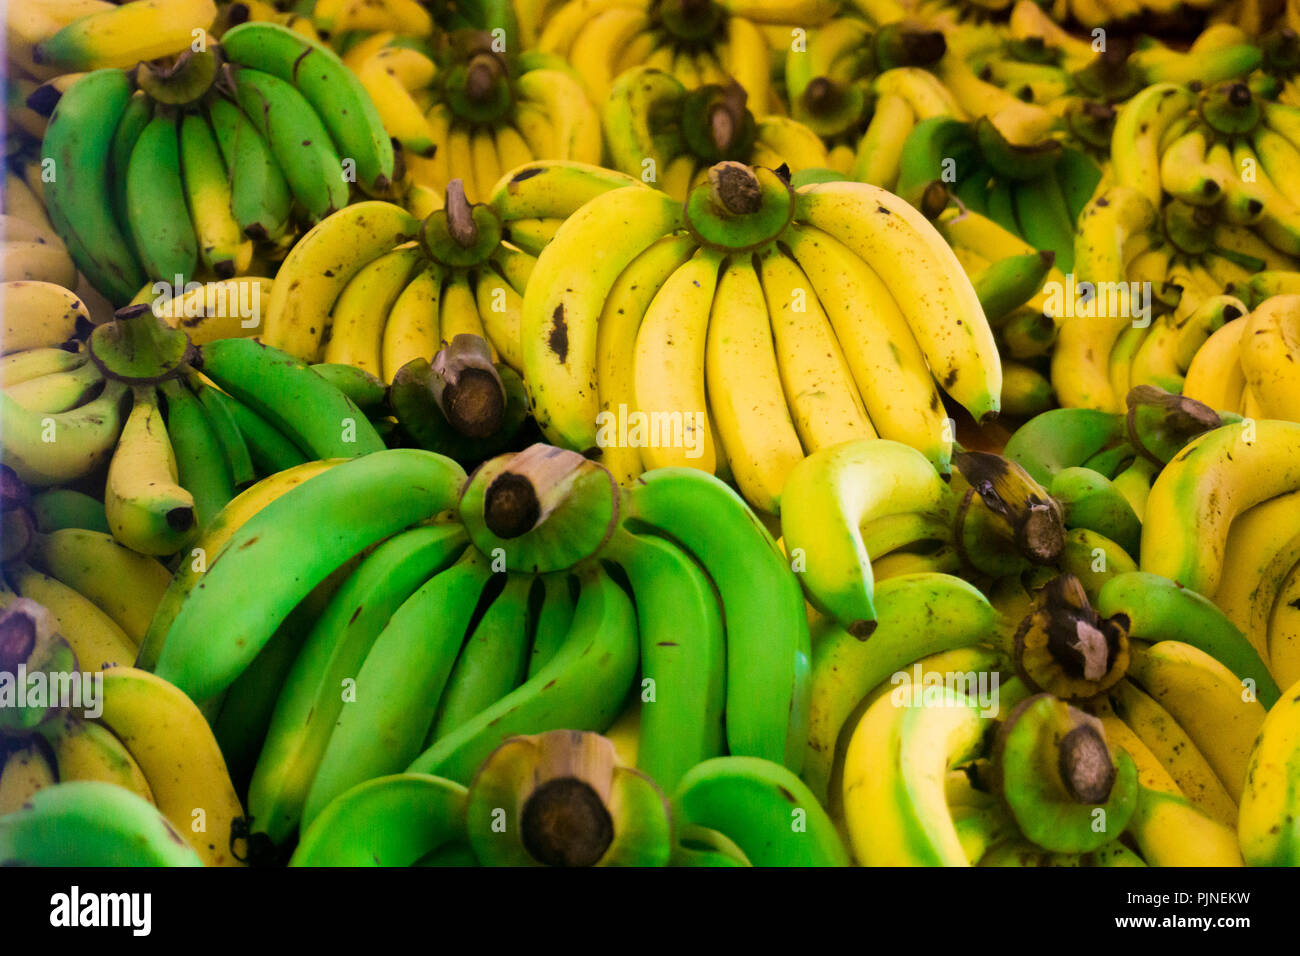 Green and yellow banana bunch together.select focus yellow banana. Stock Photo